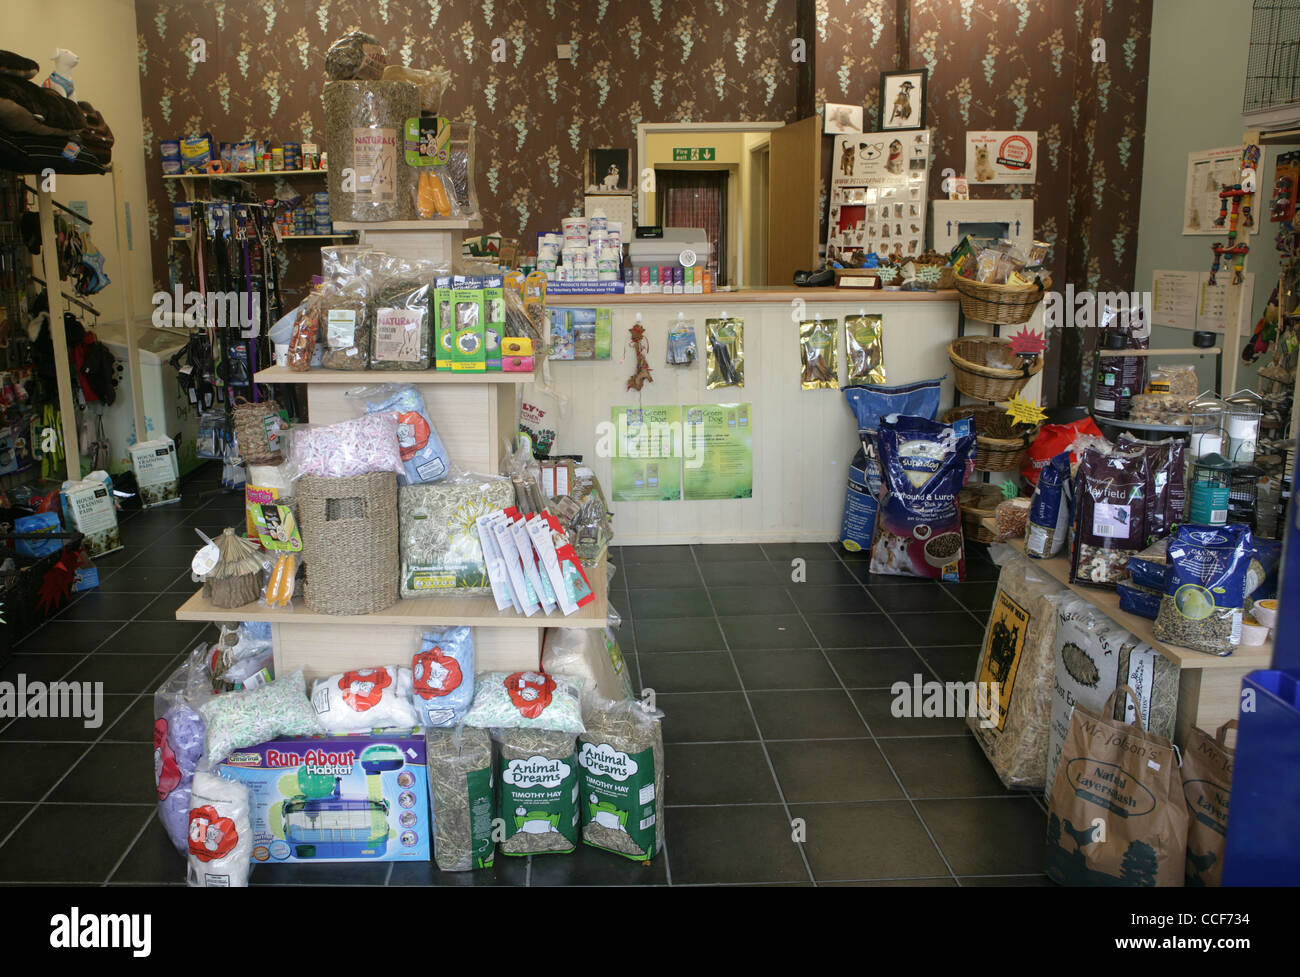 Inside a small Pet Shop Stock Photo - Alamy